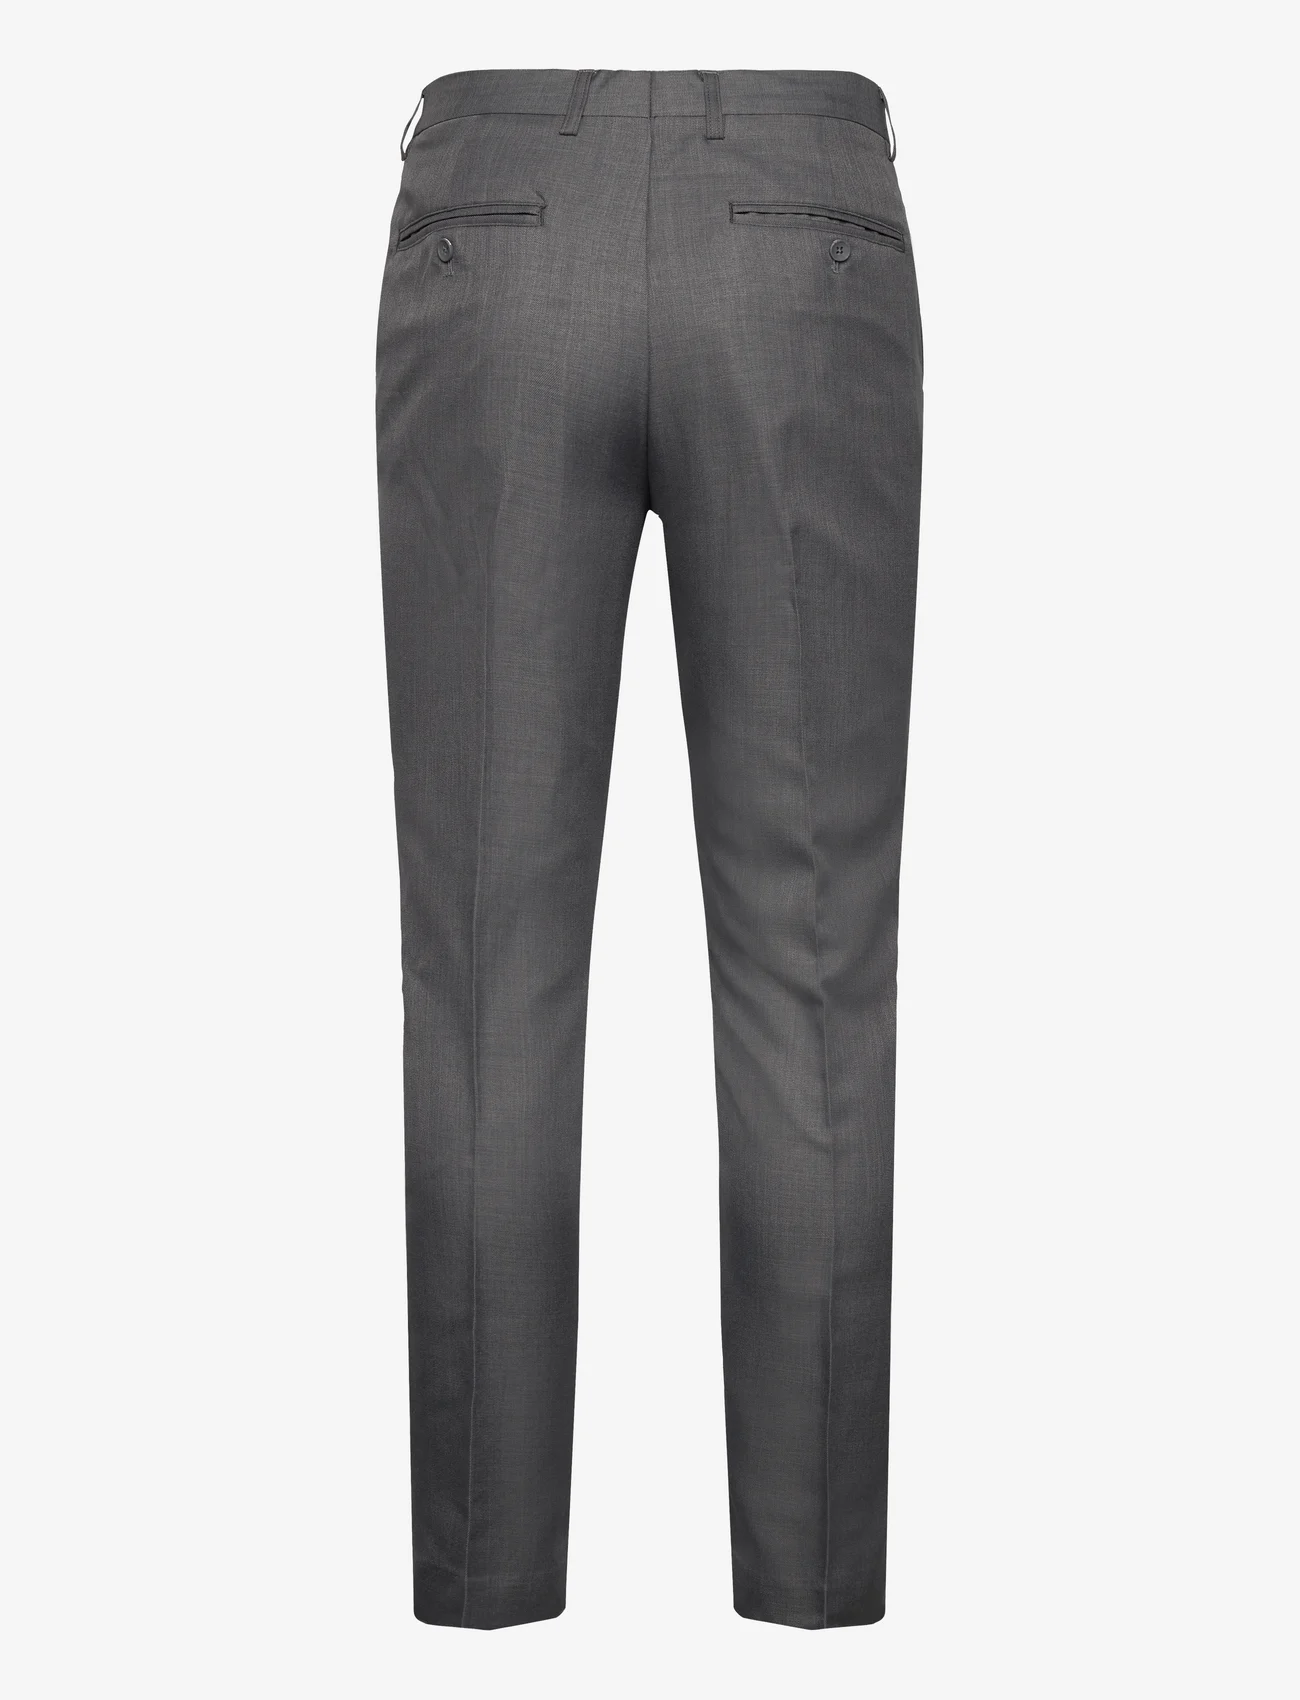 ONLY & SONS - ONSEVE SLIM CLEAN 0052 PANT - Ülikonnapüksid - medium grey melange - 1